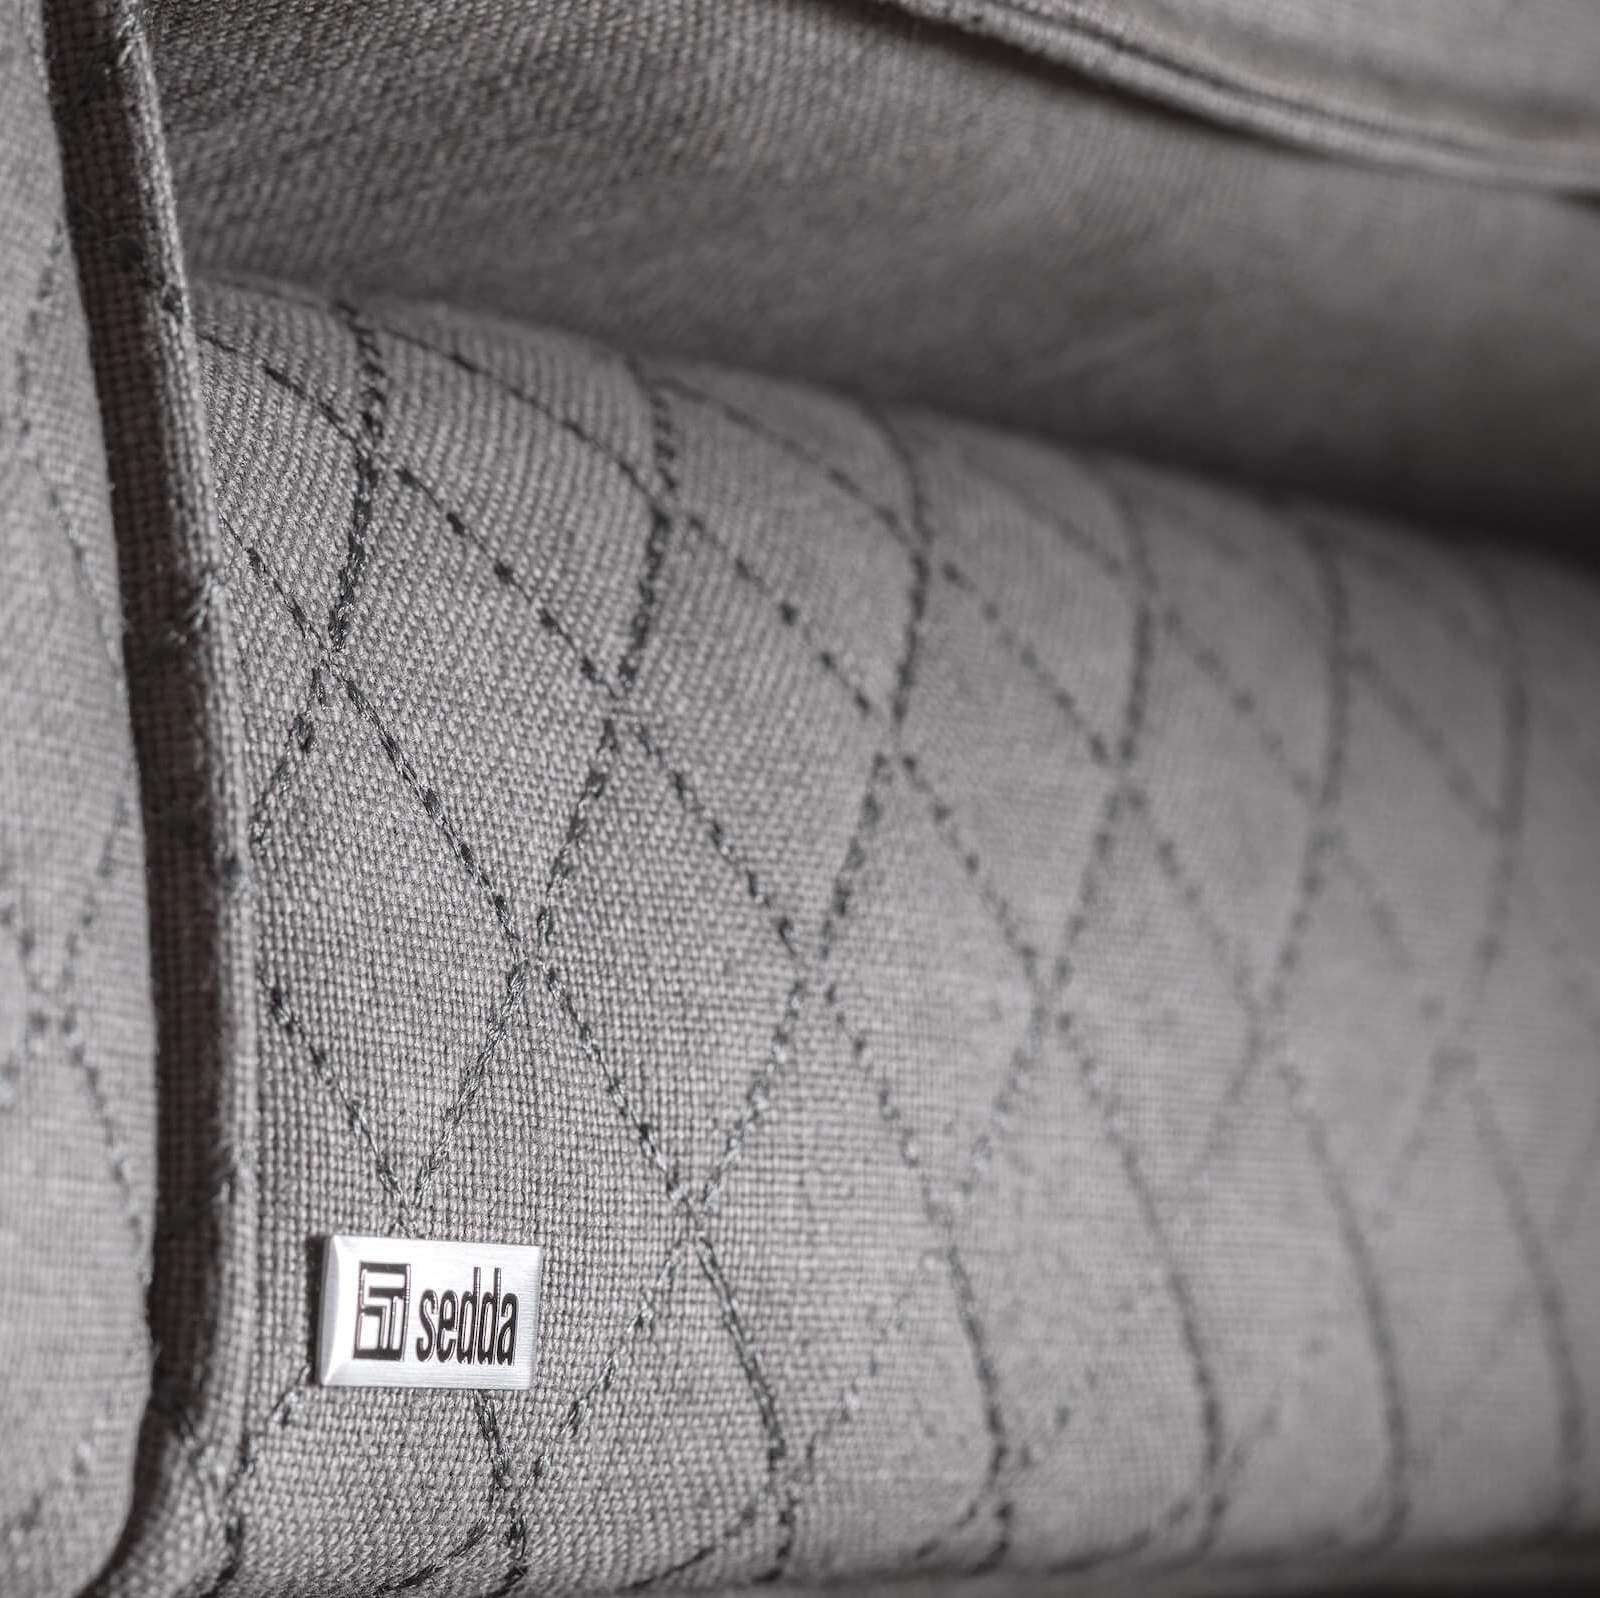 Auschnitt Sofa grau mit Etikett